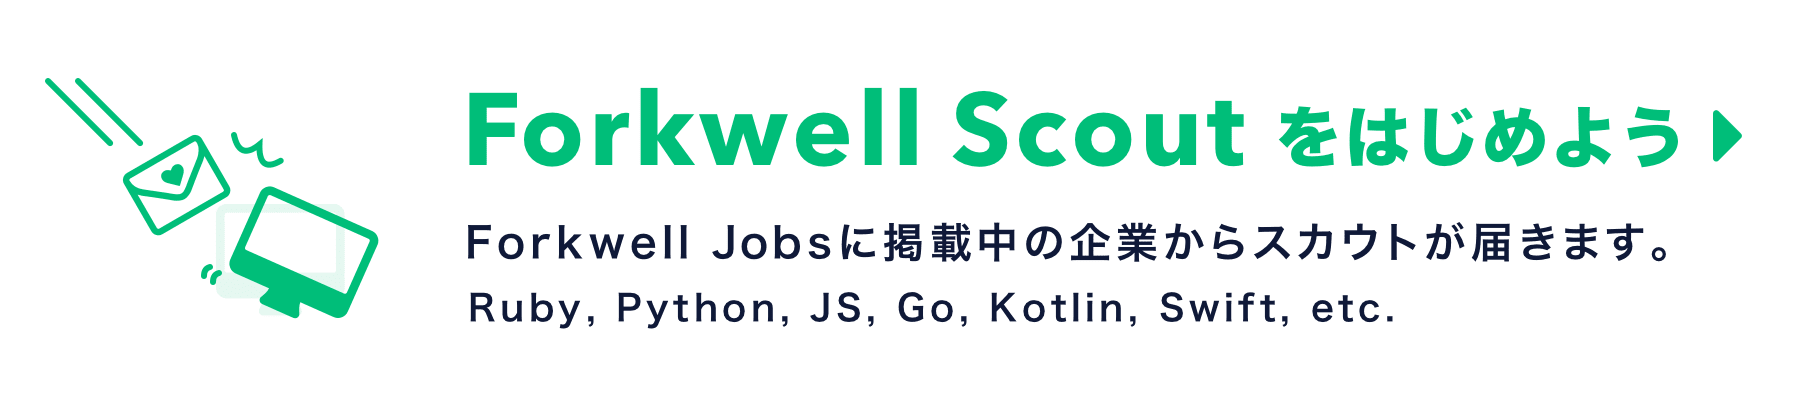 Forkwell Scout をはじめよう。Forkwell Jobsに掲載中の企業からスカウトが届きます。